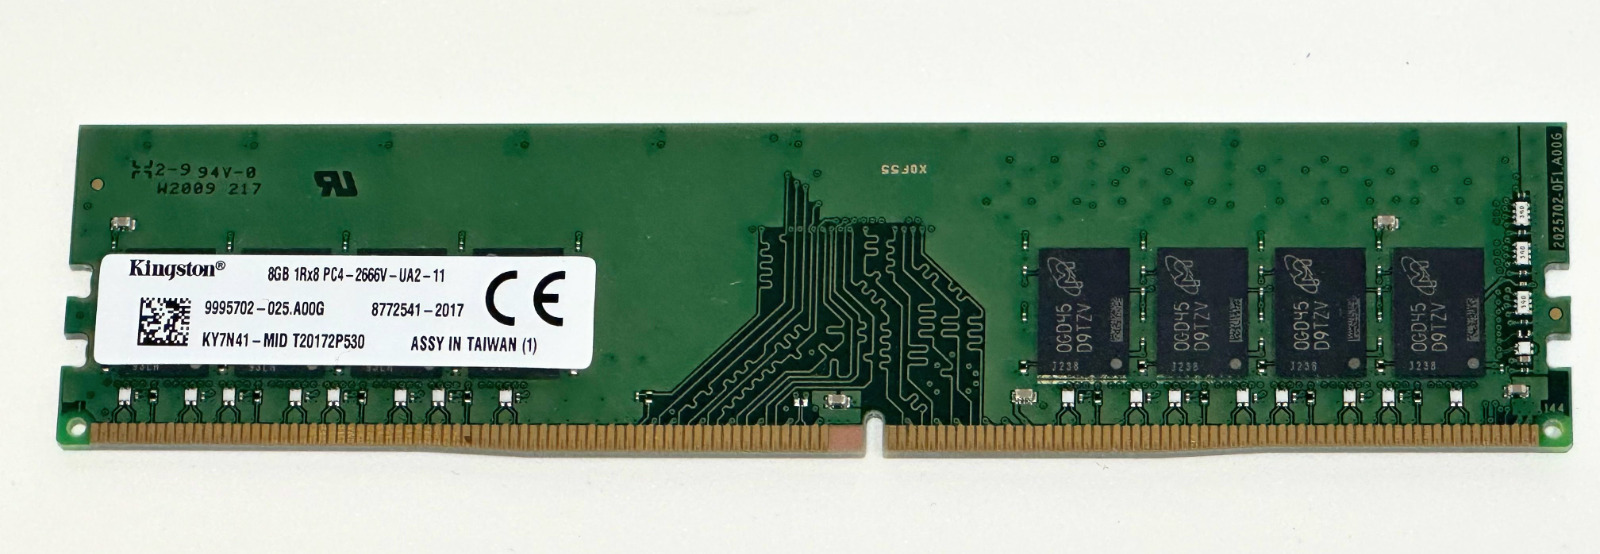 Kingston 8GB 1Rx8 PC4-2666V (9995702-025.A00G) DDR4 Desktop RAM